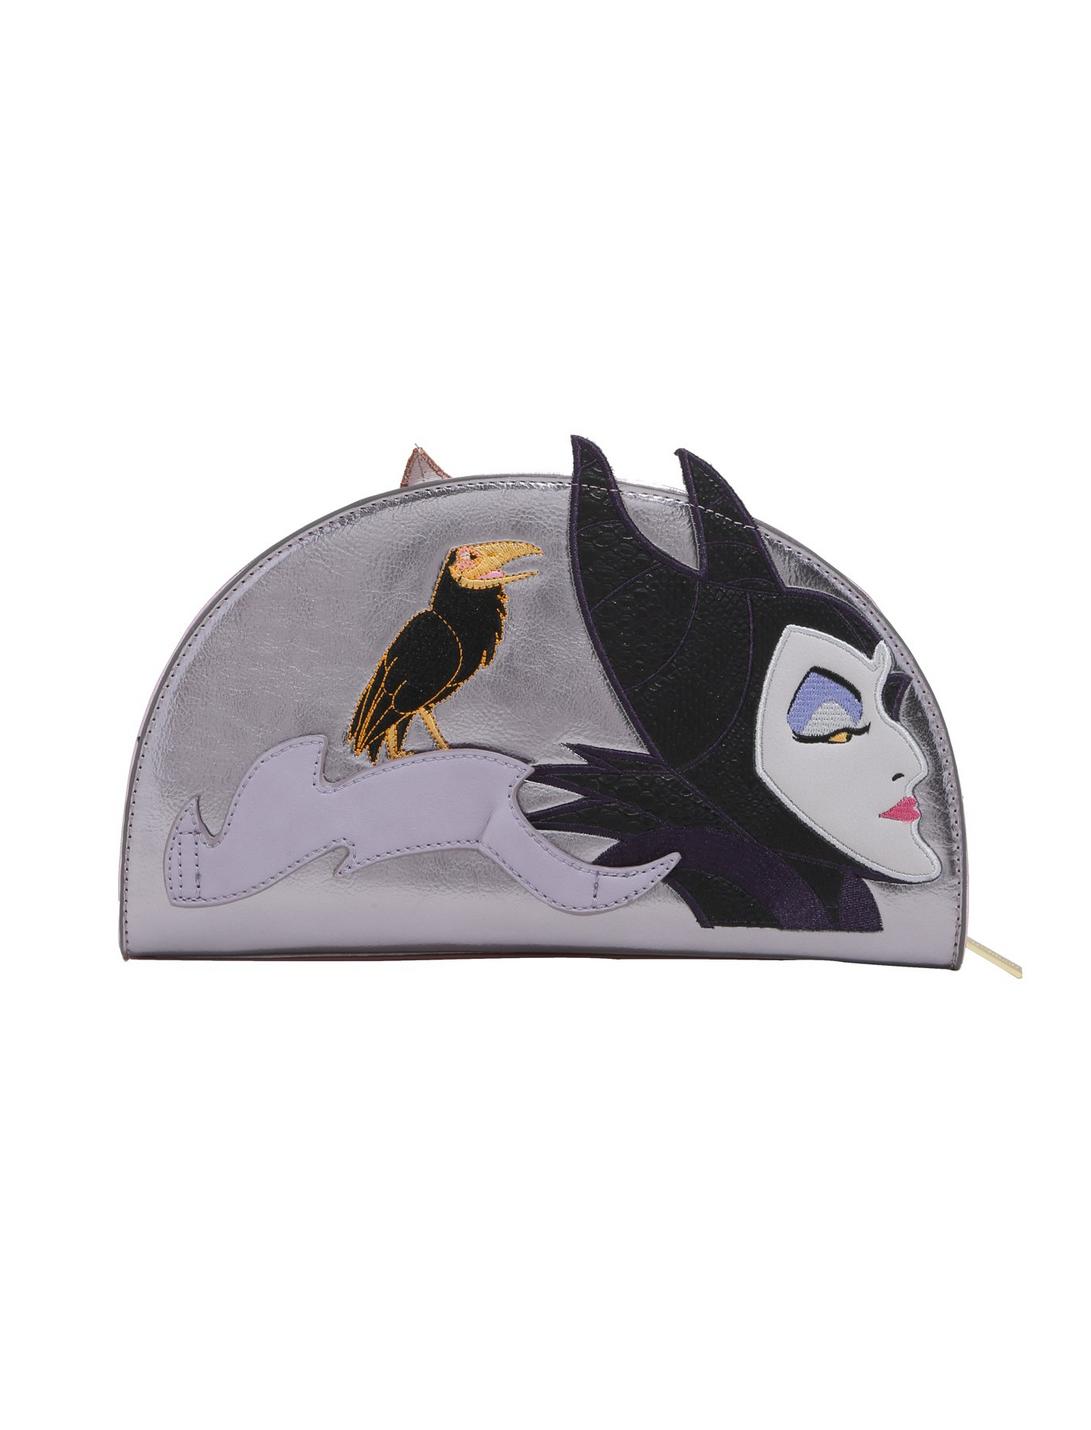 Danielle Nicole Disney Sleeping Beauty Metallic Maleficent Clutch Bag, , hi-res